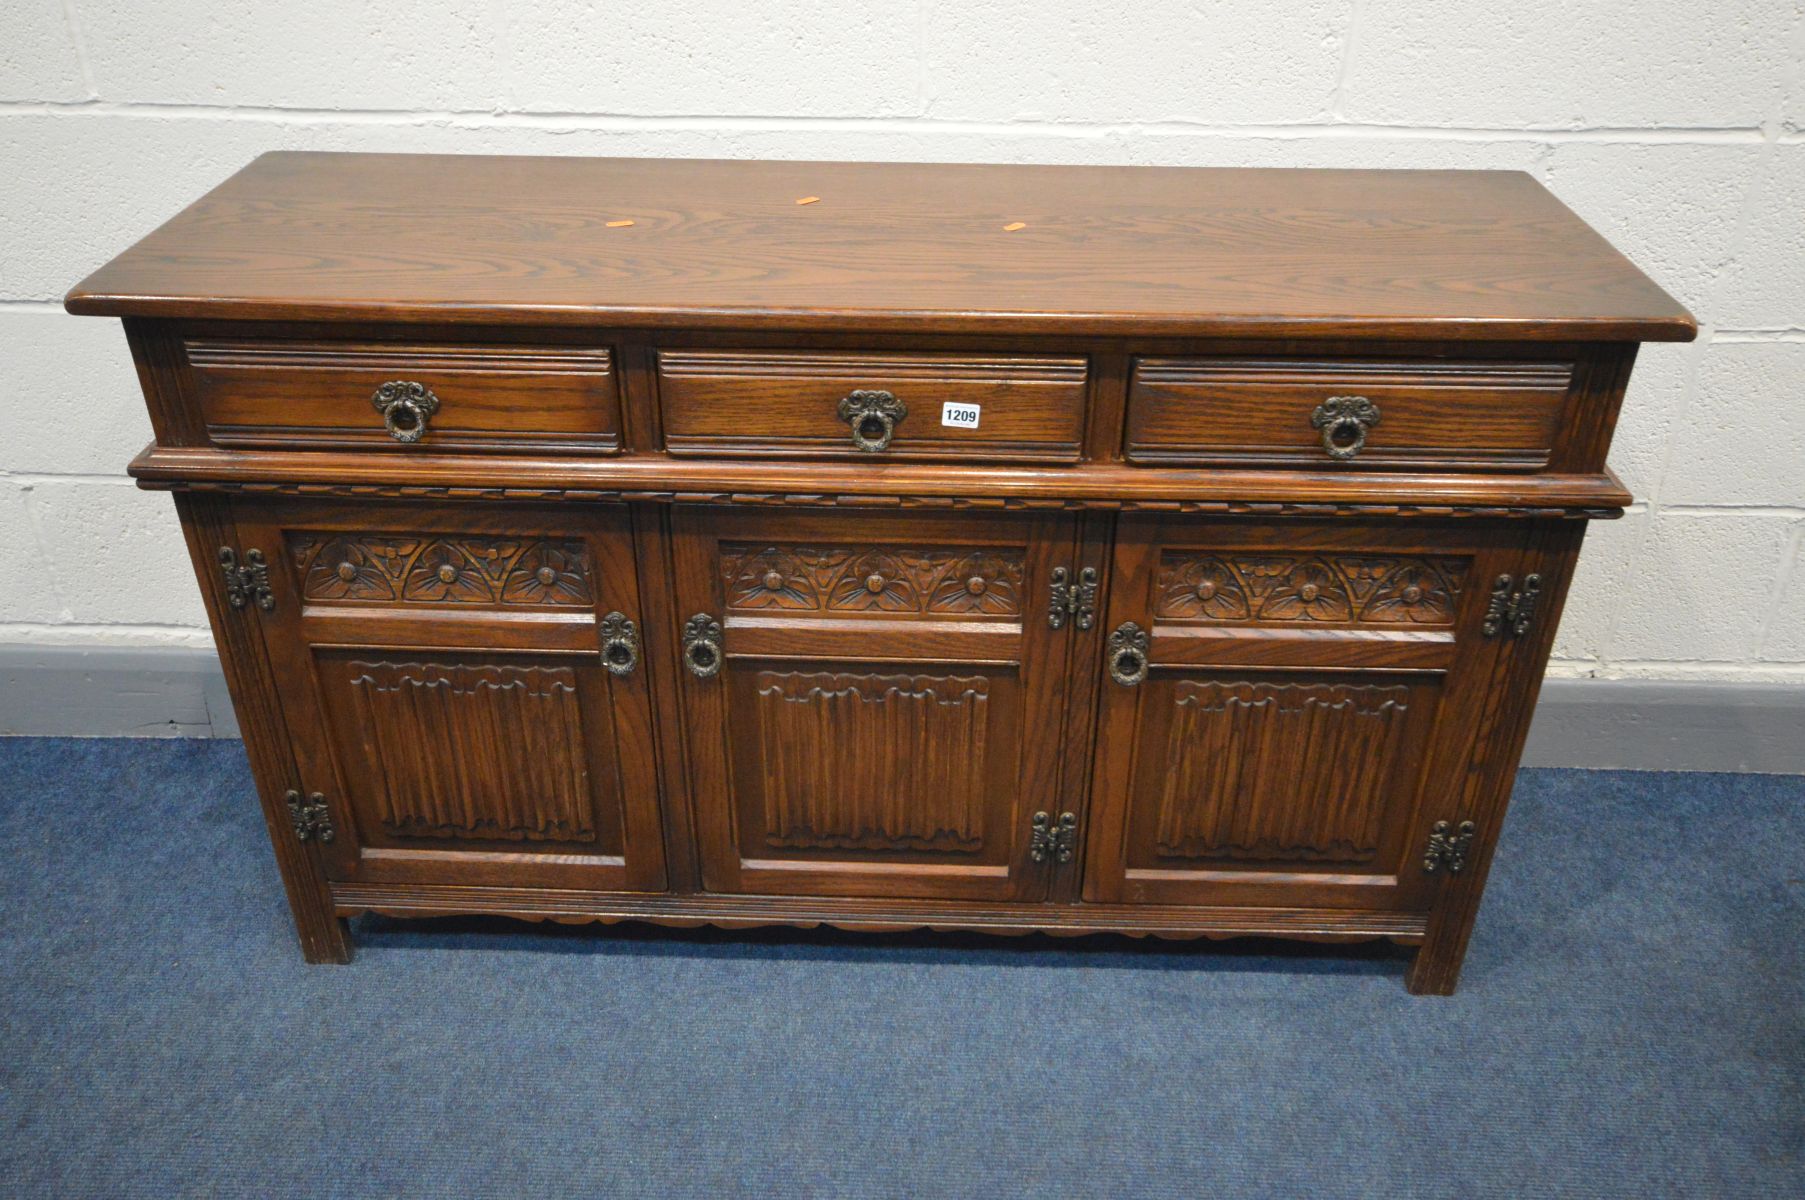 AN OLD CHARM SIDEBOARD, three drawers above three cupboard doors, width 136cm x depth 44cm x